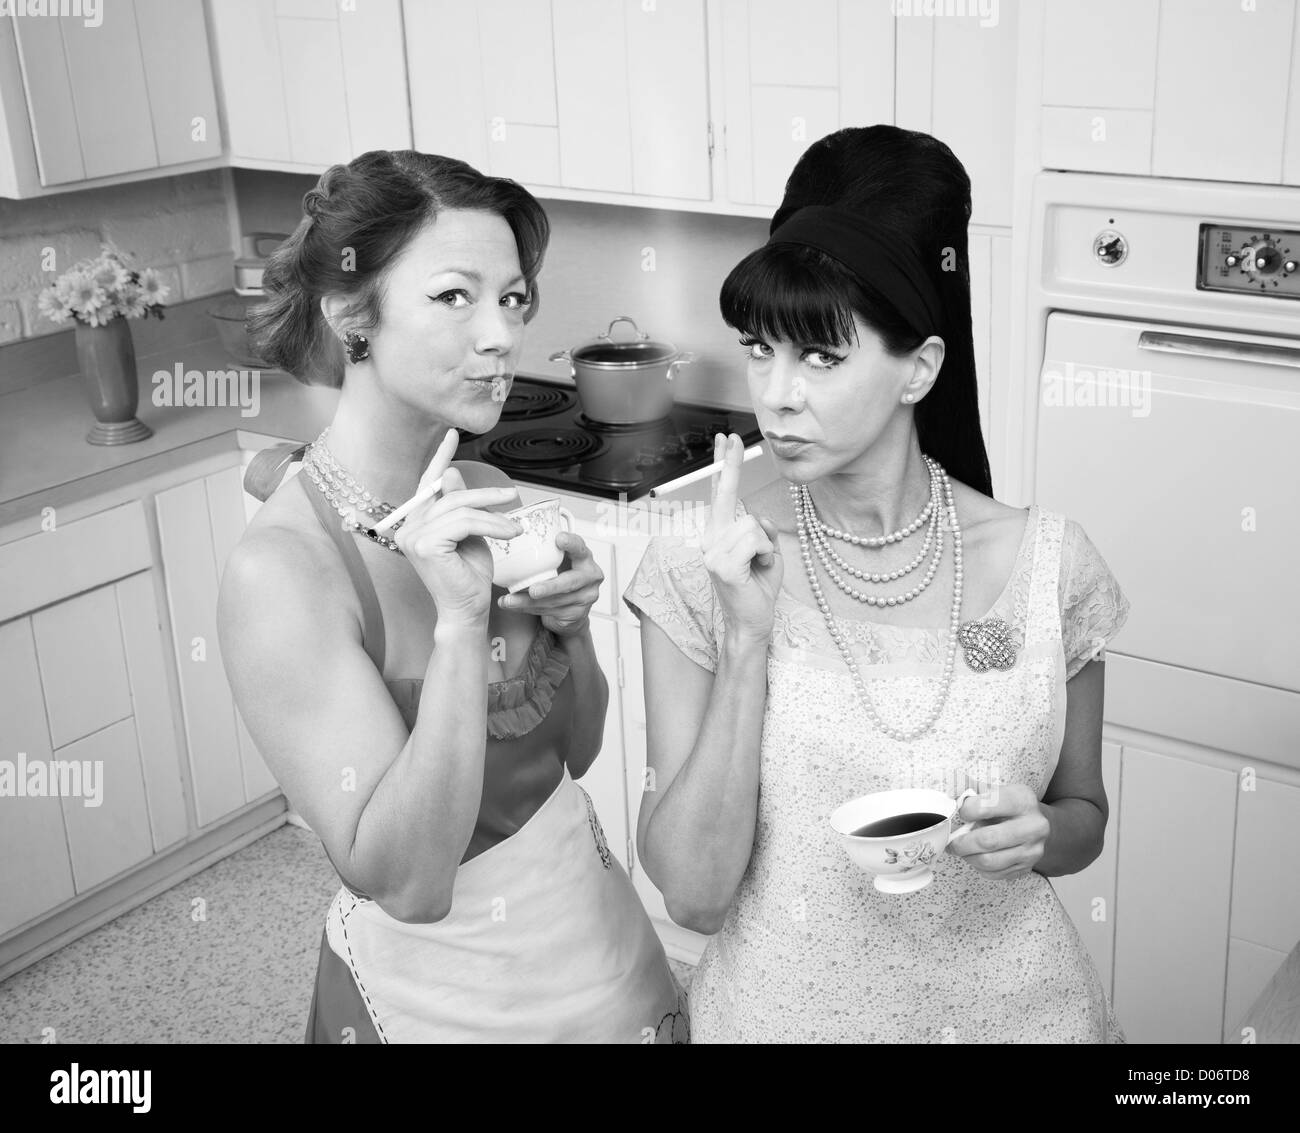 Two retro-styled women smoking cigarettes in a kitchen Stock Photo